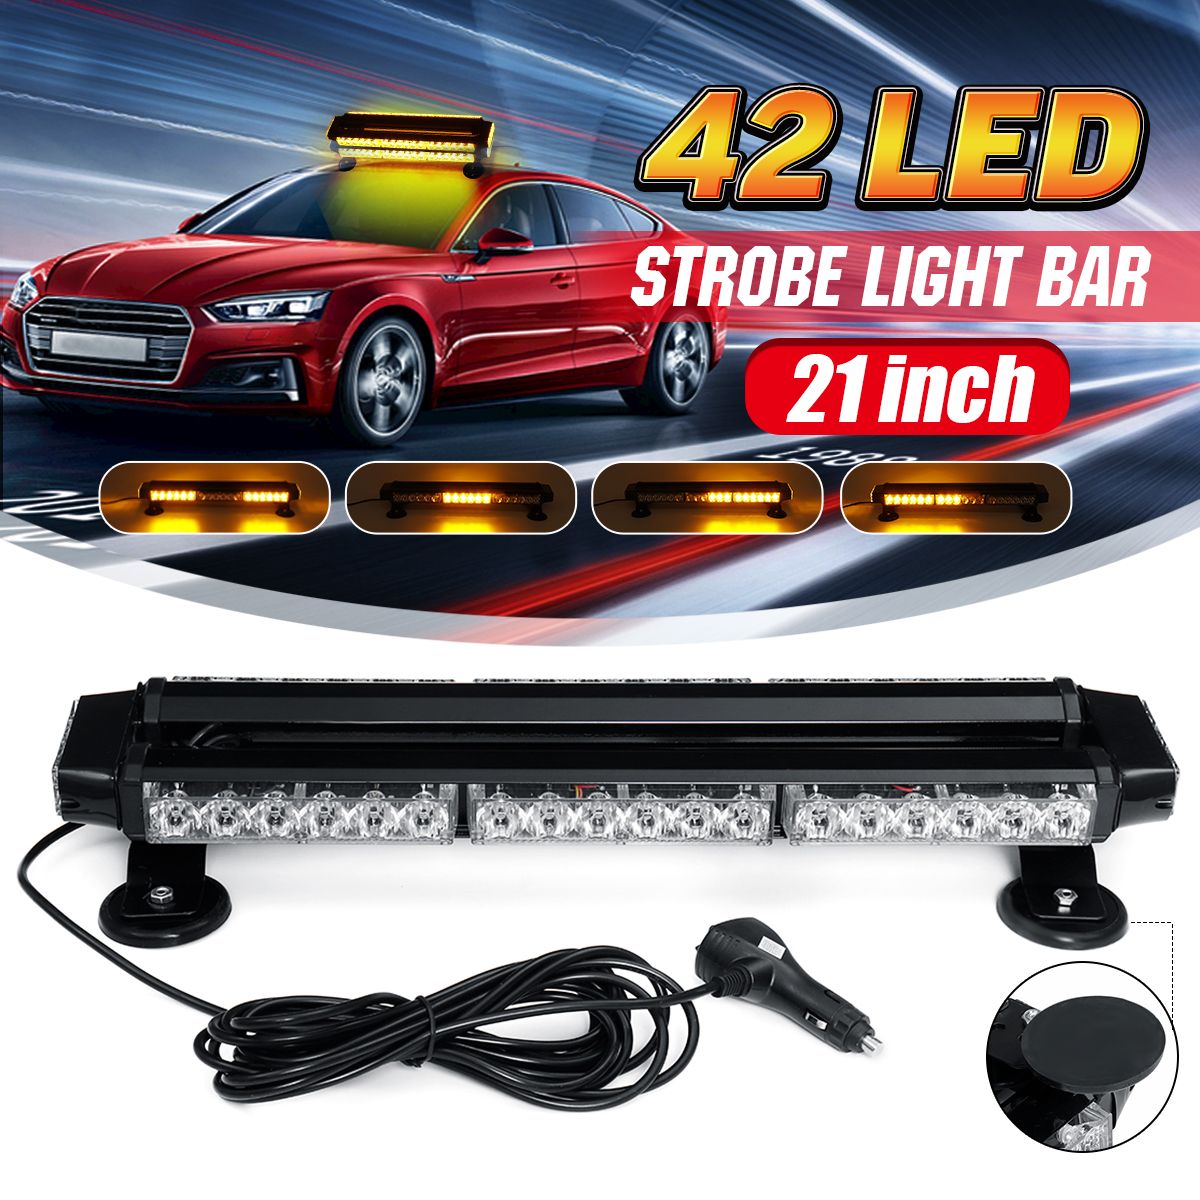 21-Inch-144W-42LED-Double-Side-Traffic-Strobe-Flash-Light-Bar-Amber-Emergency-Lamp-Magnetic-Mount-12-1553113